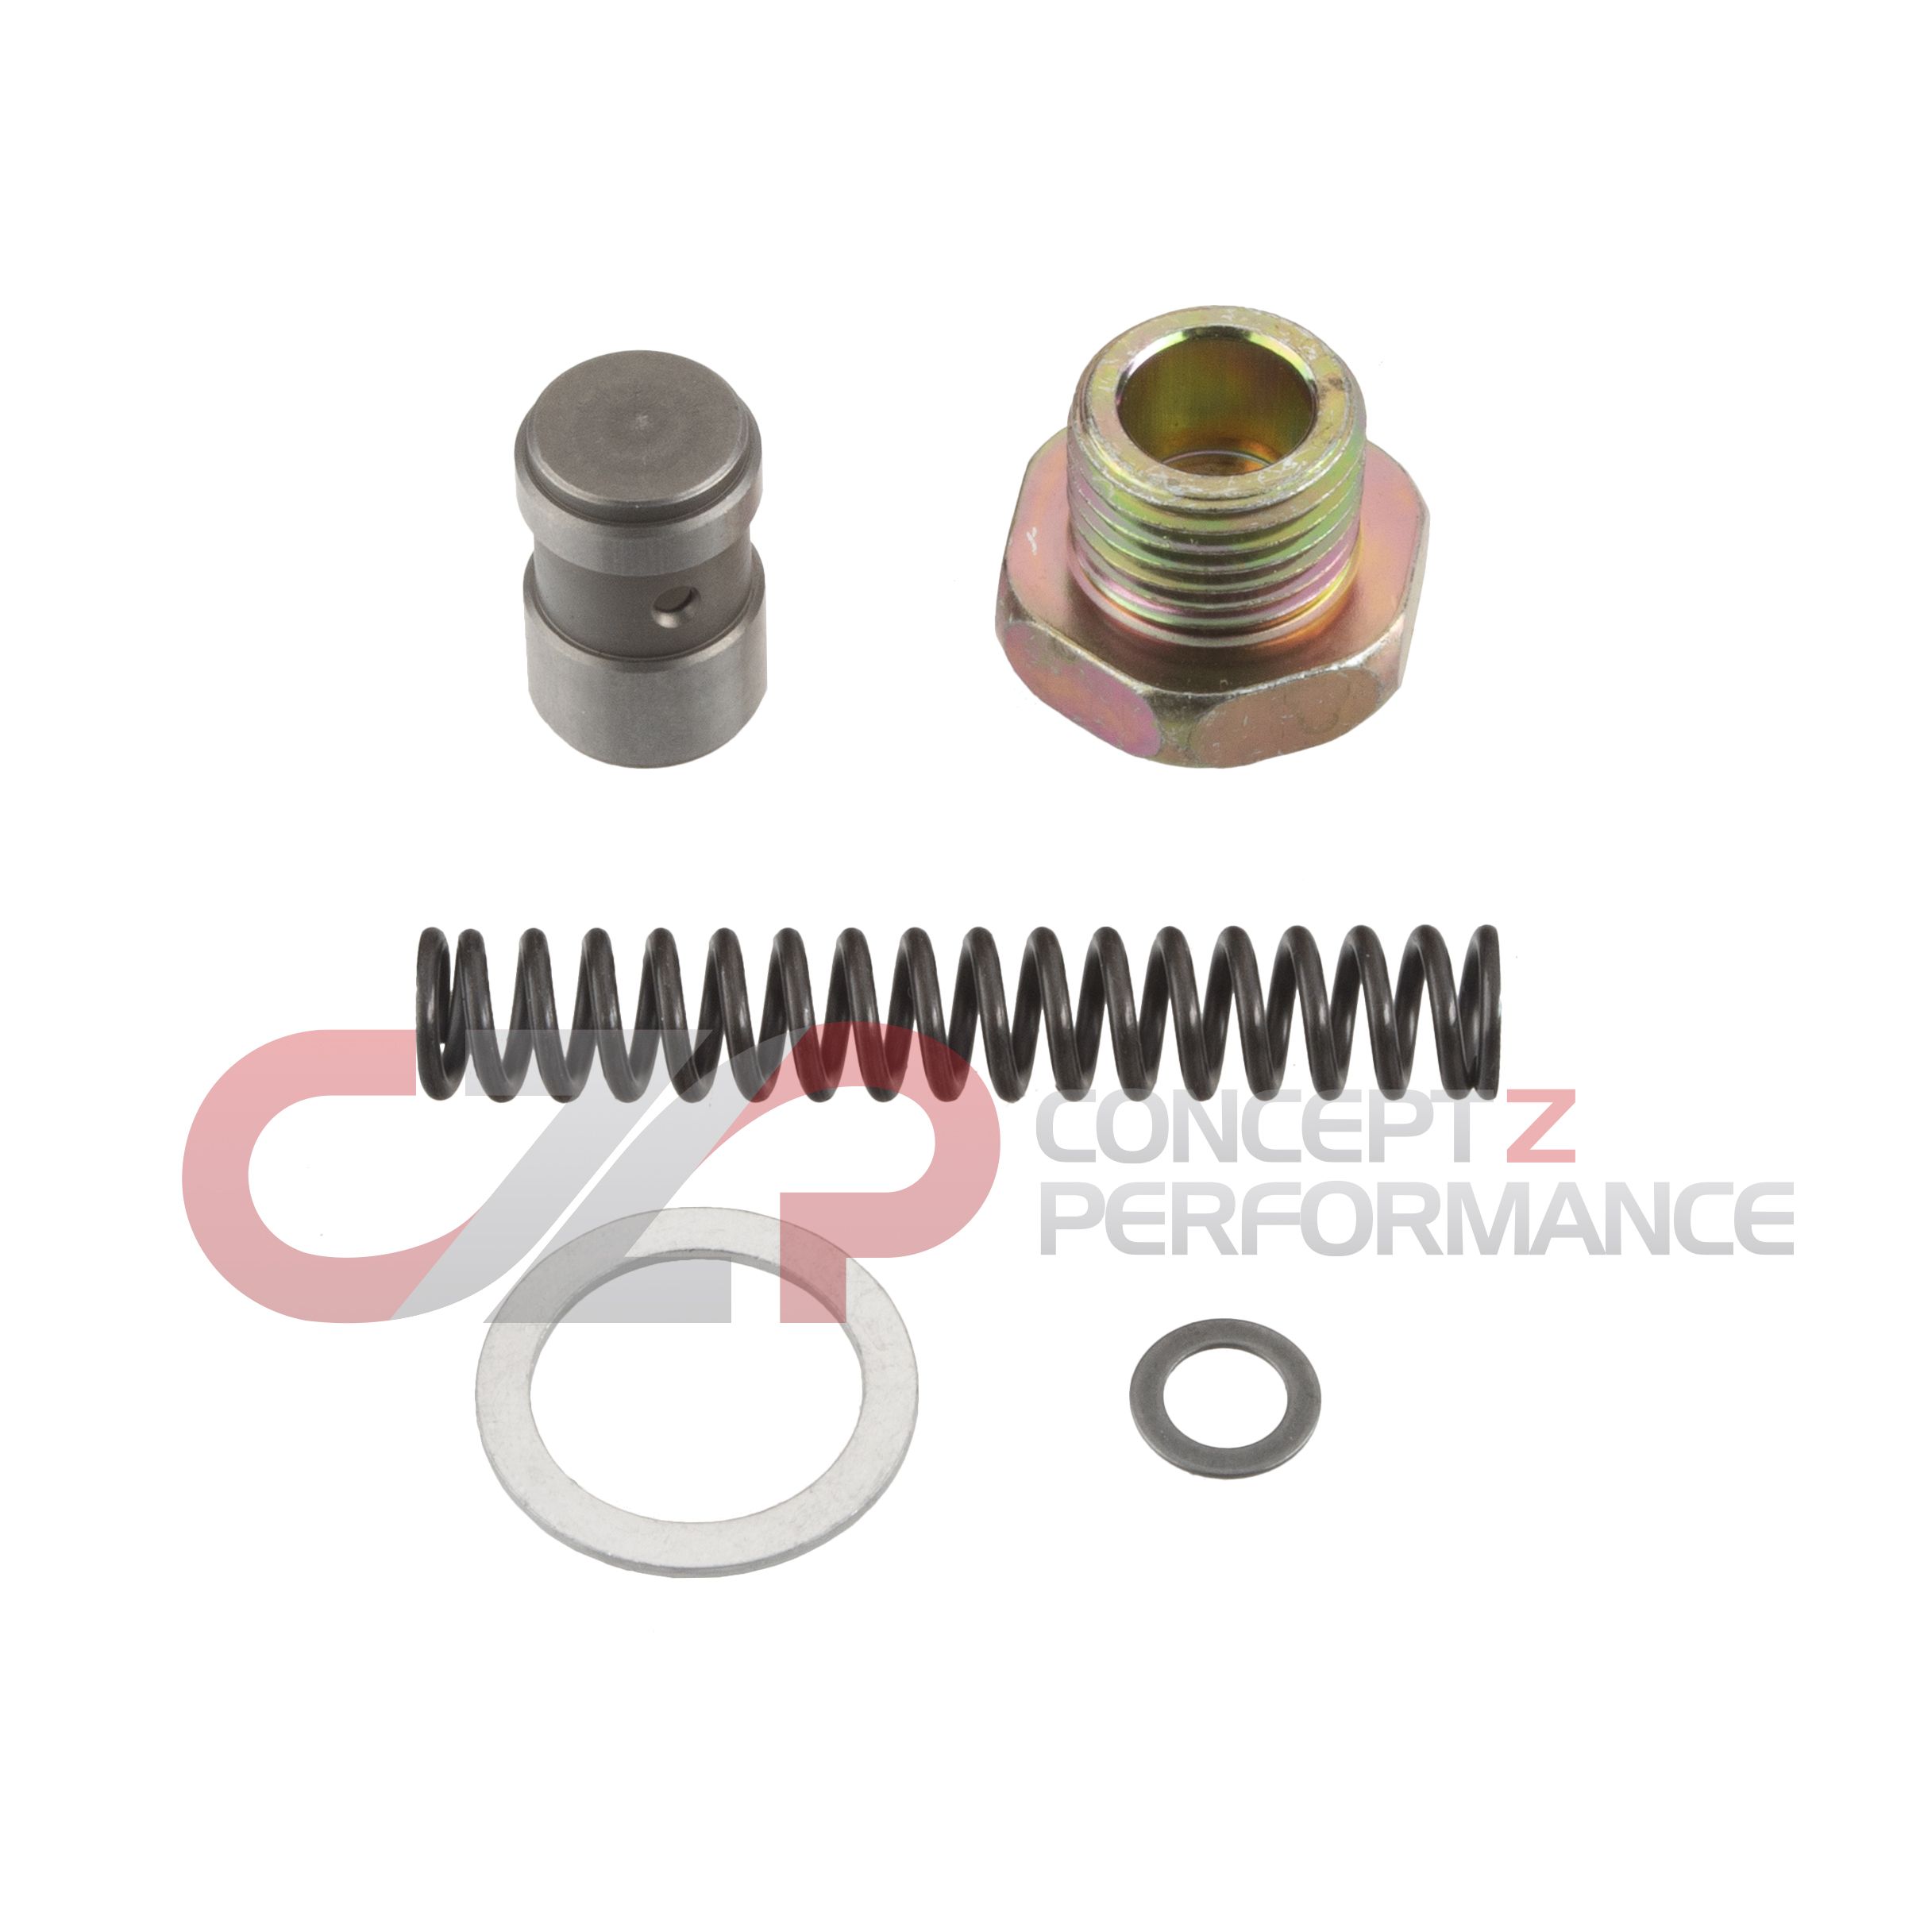 Nissan OEM Oil Pump Pressure Regulator Valve Assembly - Nissan 240SX KA24DE S13 S14